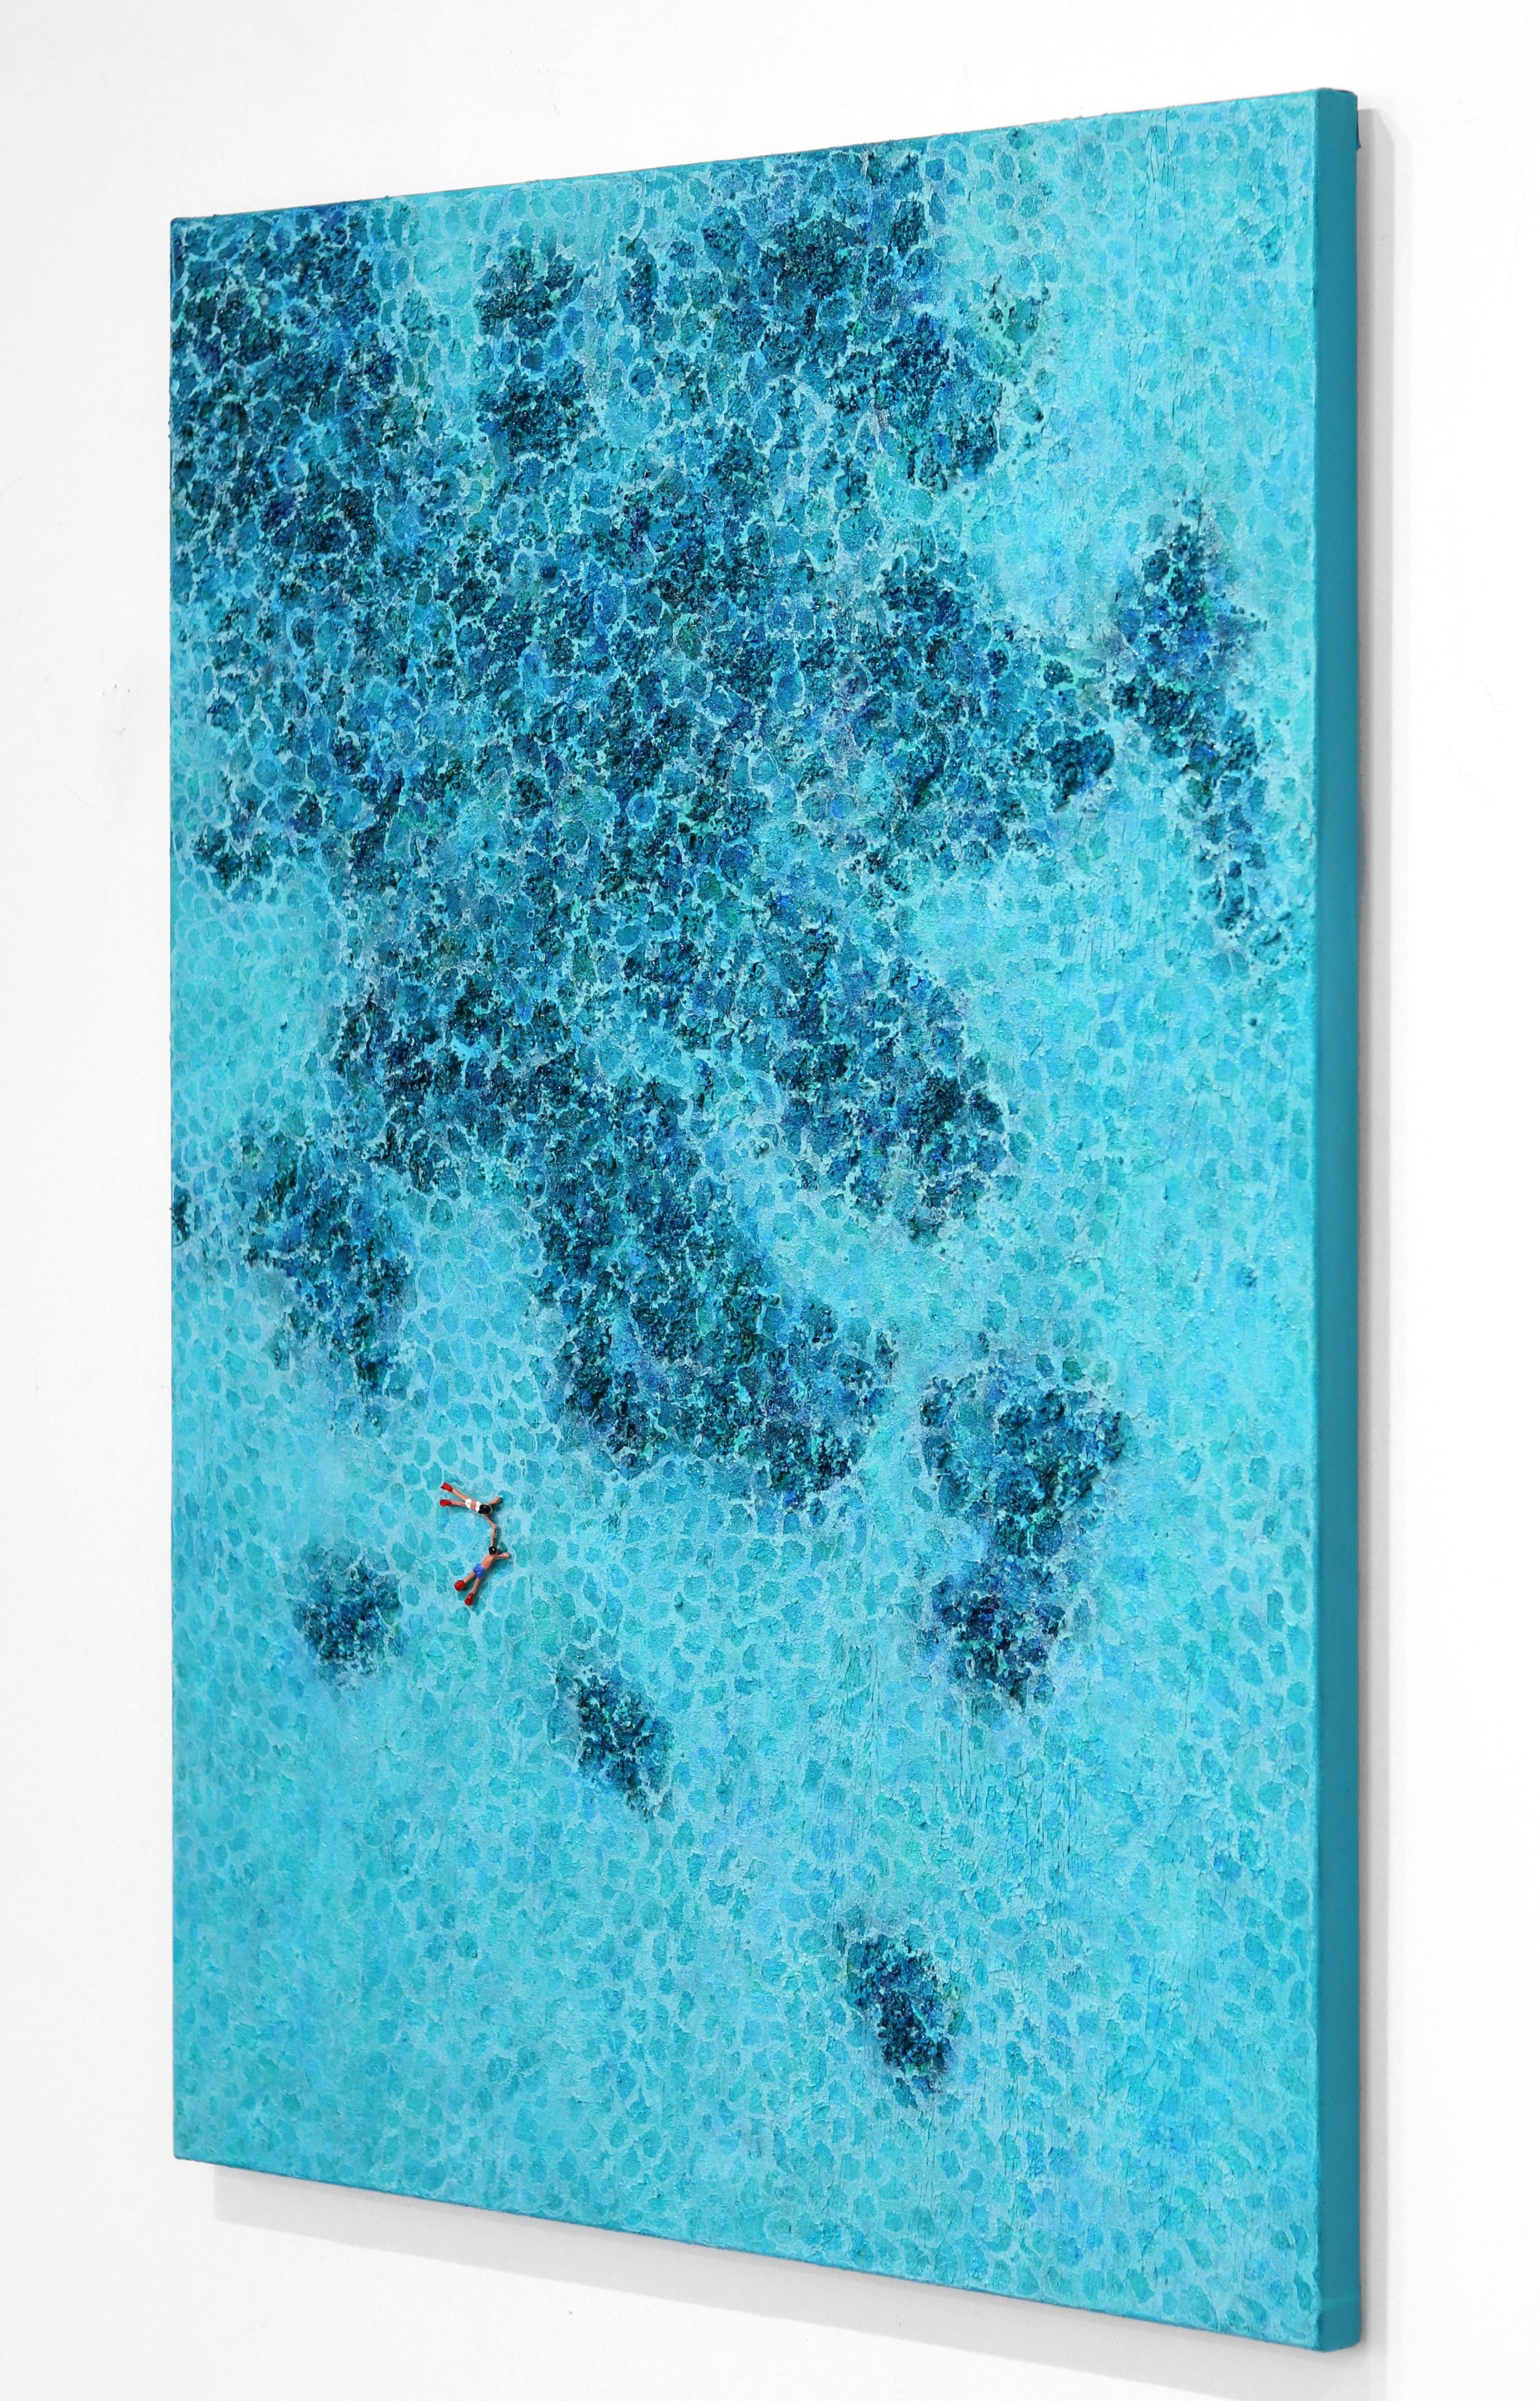 You Will Always Be The One - Grande peinture de paysage aquatique bleu - Bleu Abstract Painting par Elizabeth Langreiter